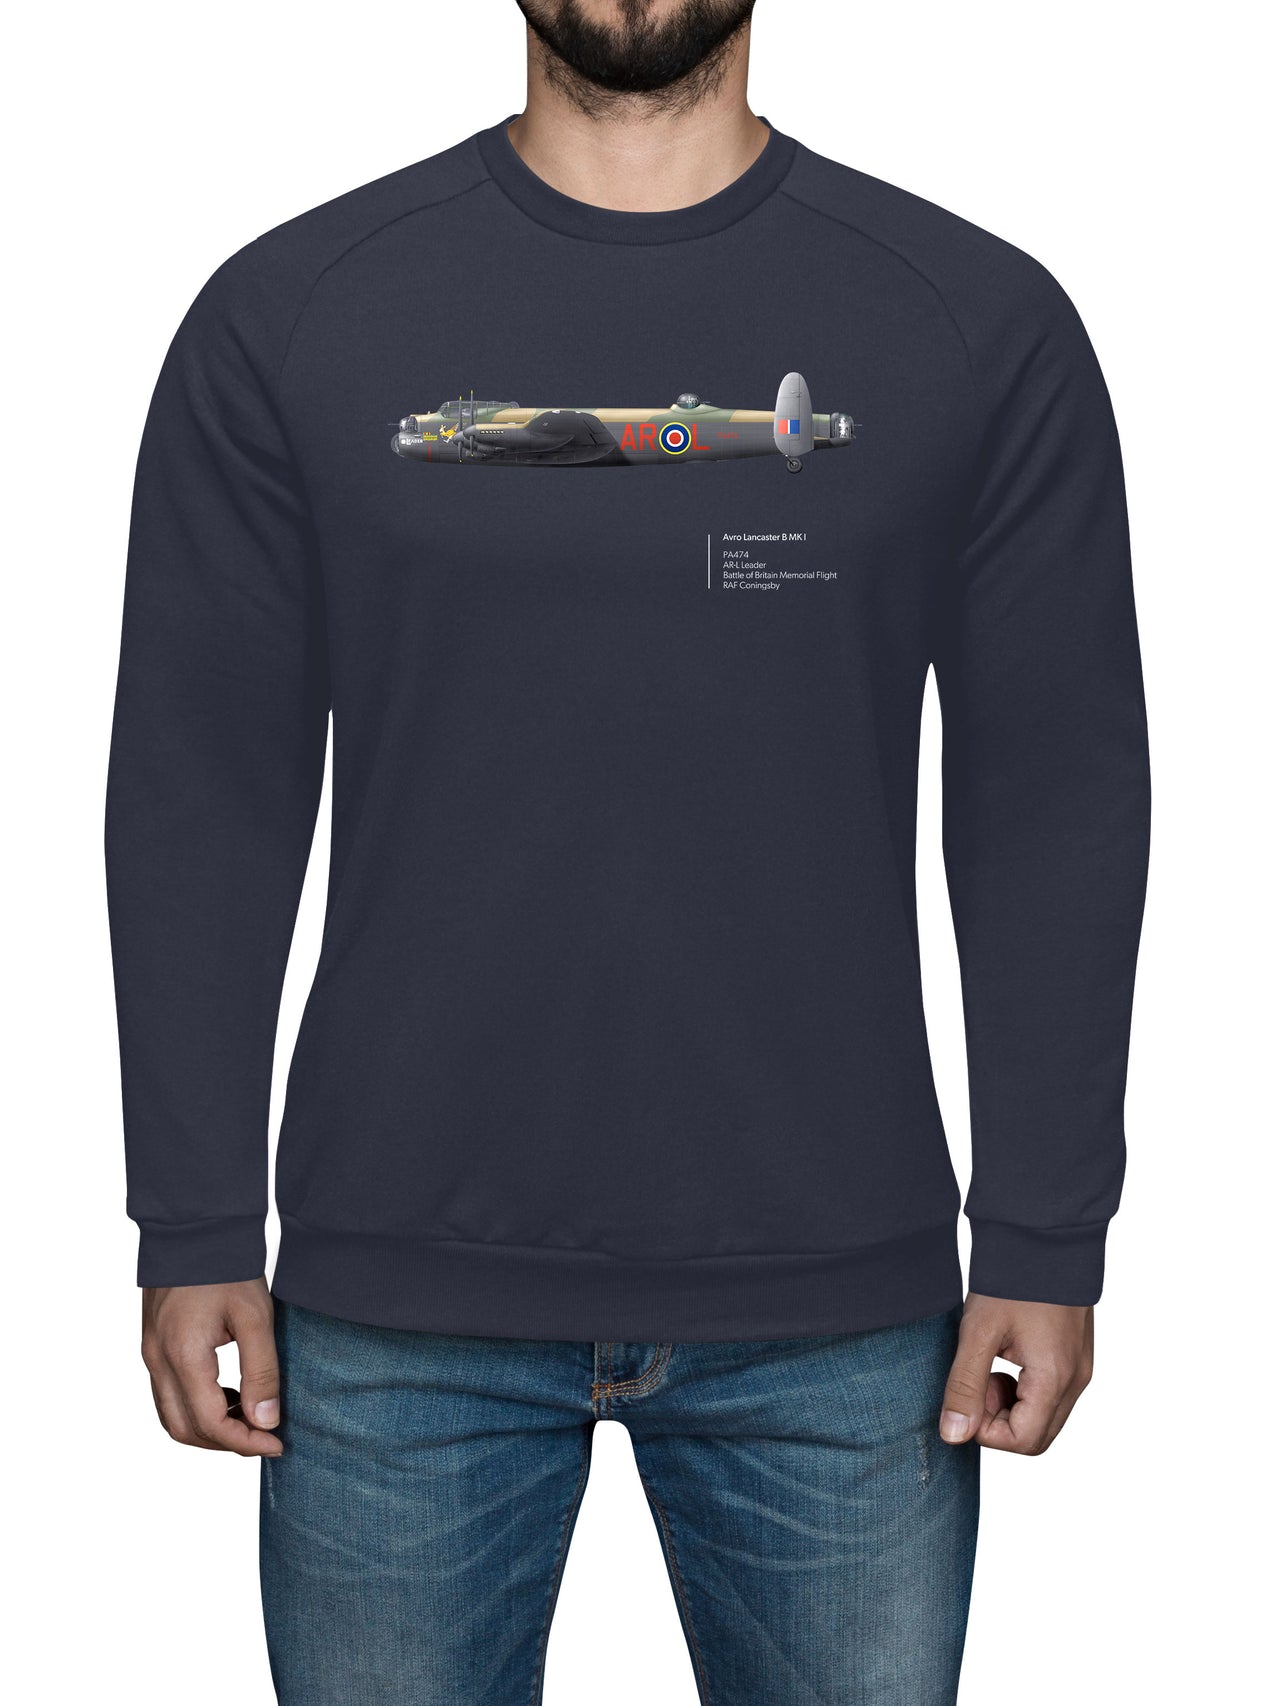 BBMF Avro Lancaster - Sweat Shirt